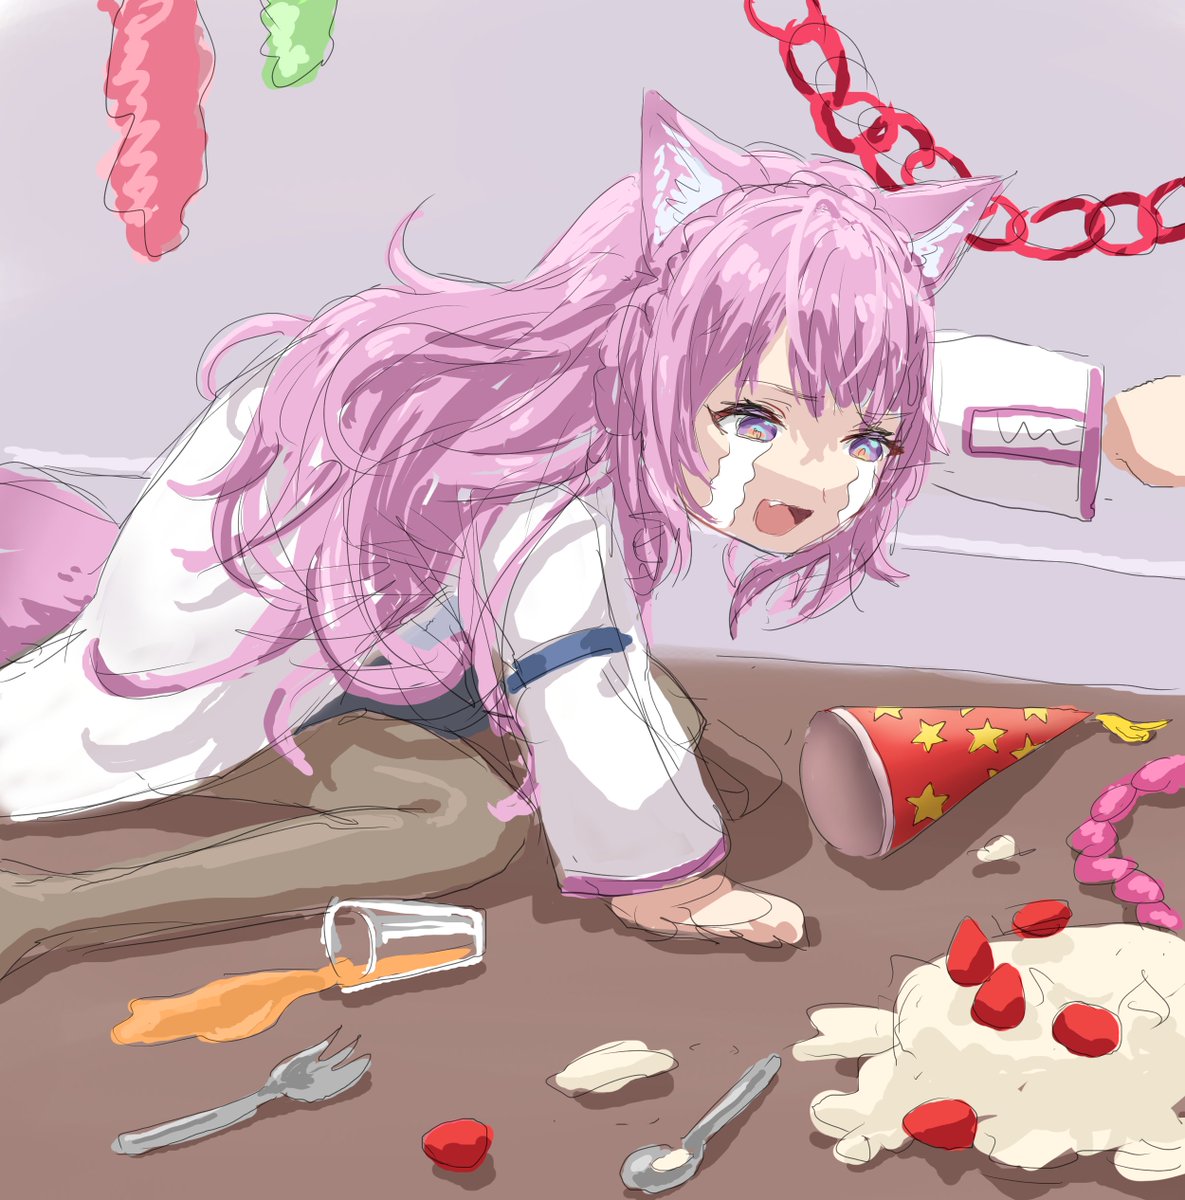 hakui koyori party hat animal ears crying pink hair spill food long hair  illustration images